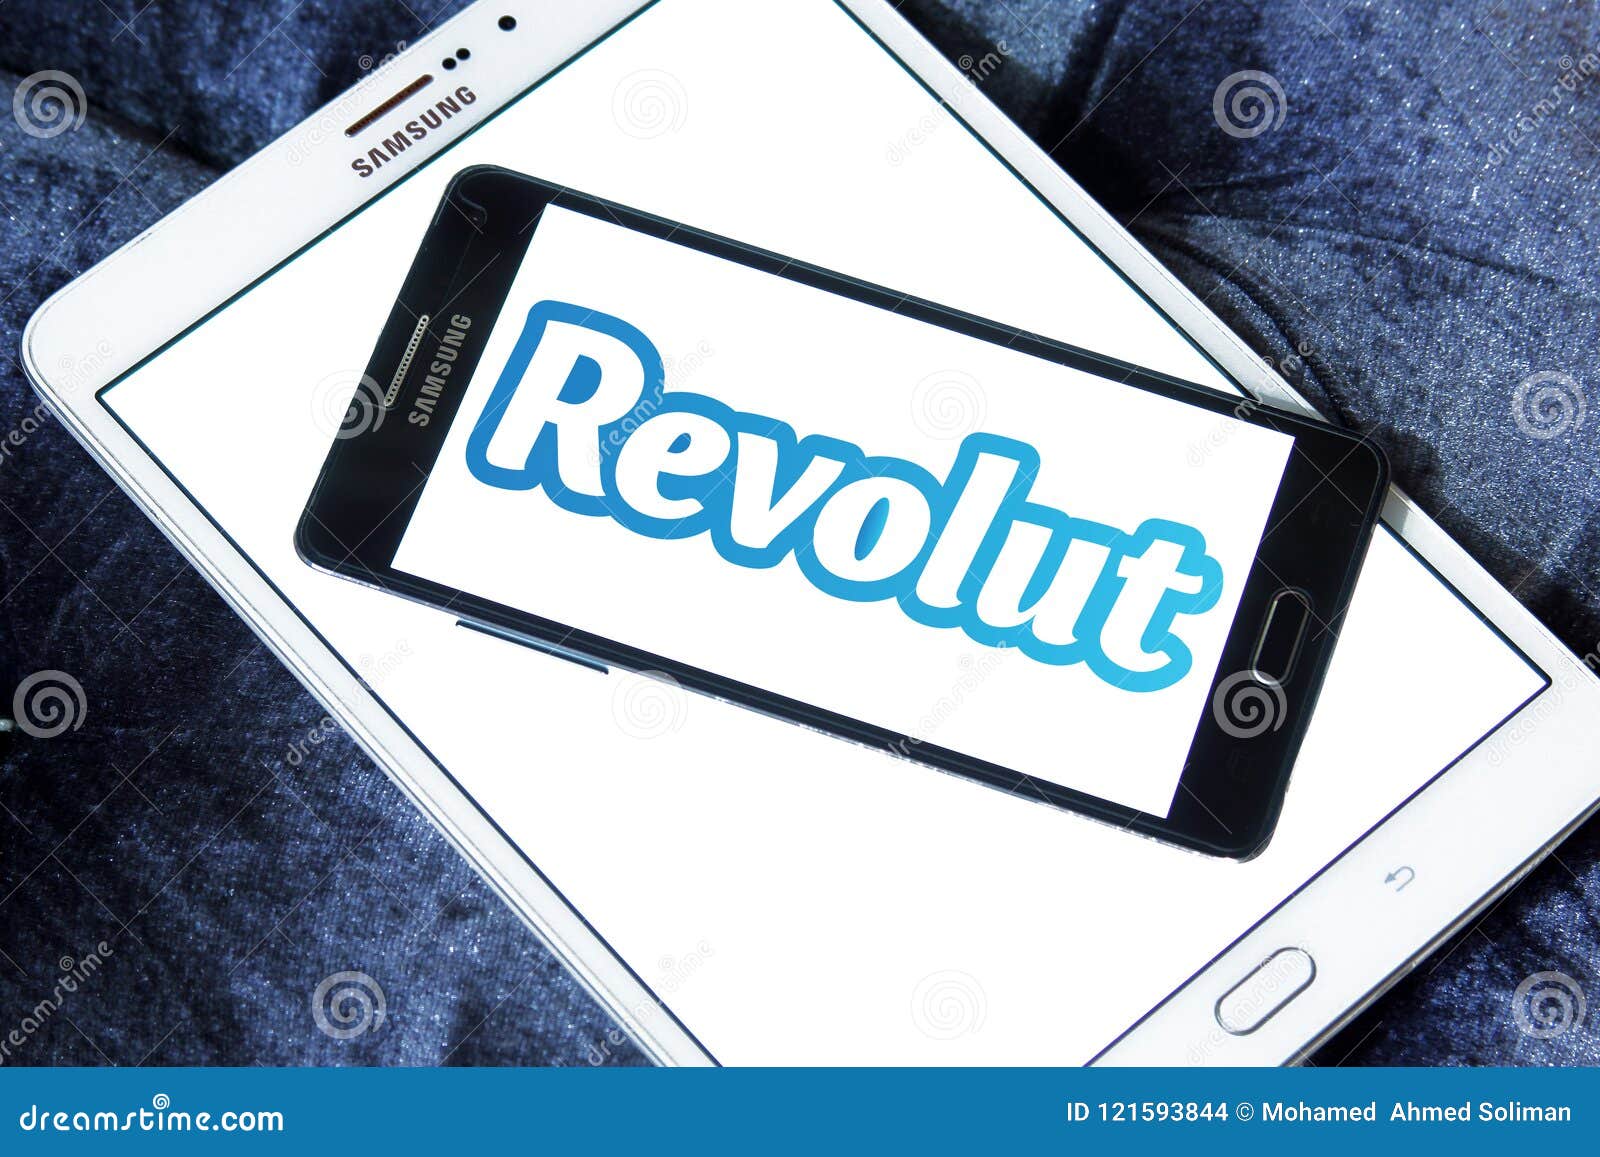 Revolut Digital Banking Logo Editorial Stock Image Image Of Illustrative Exchange 121593844